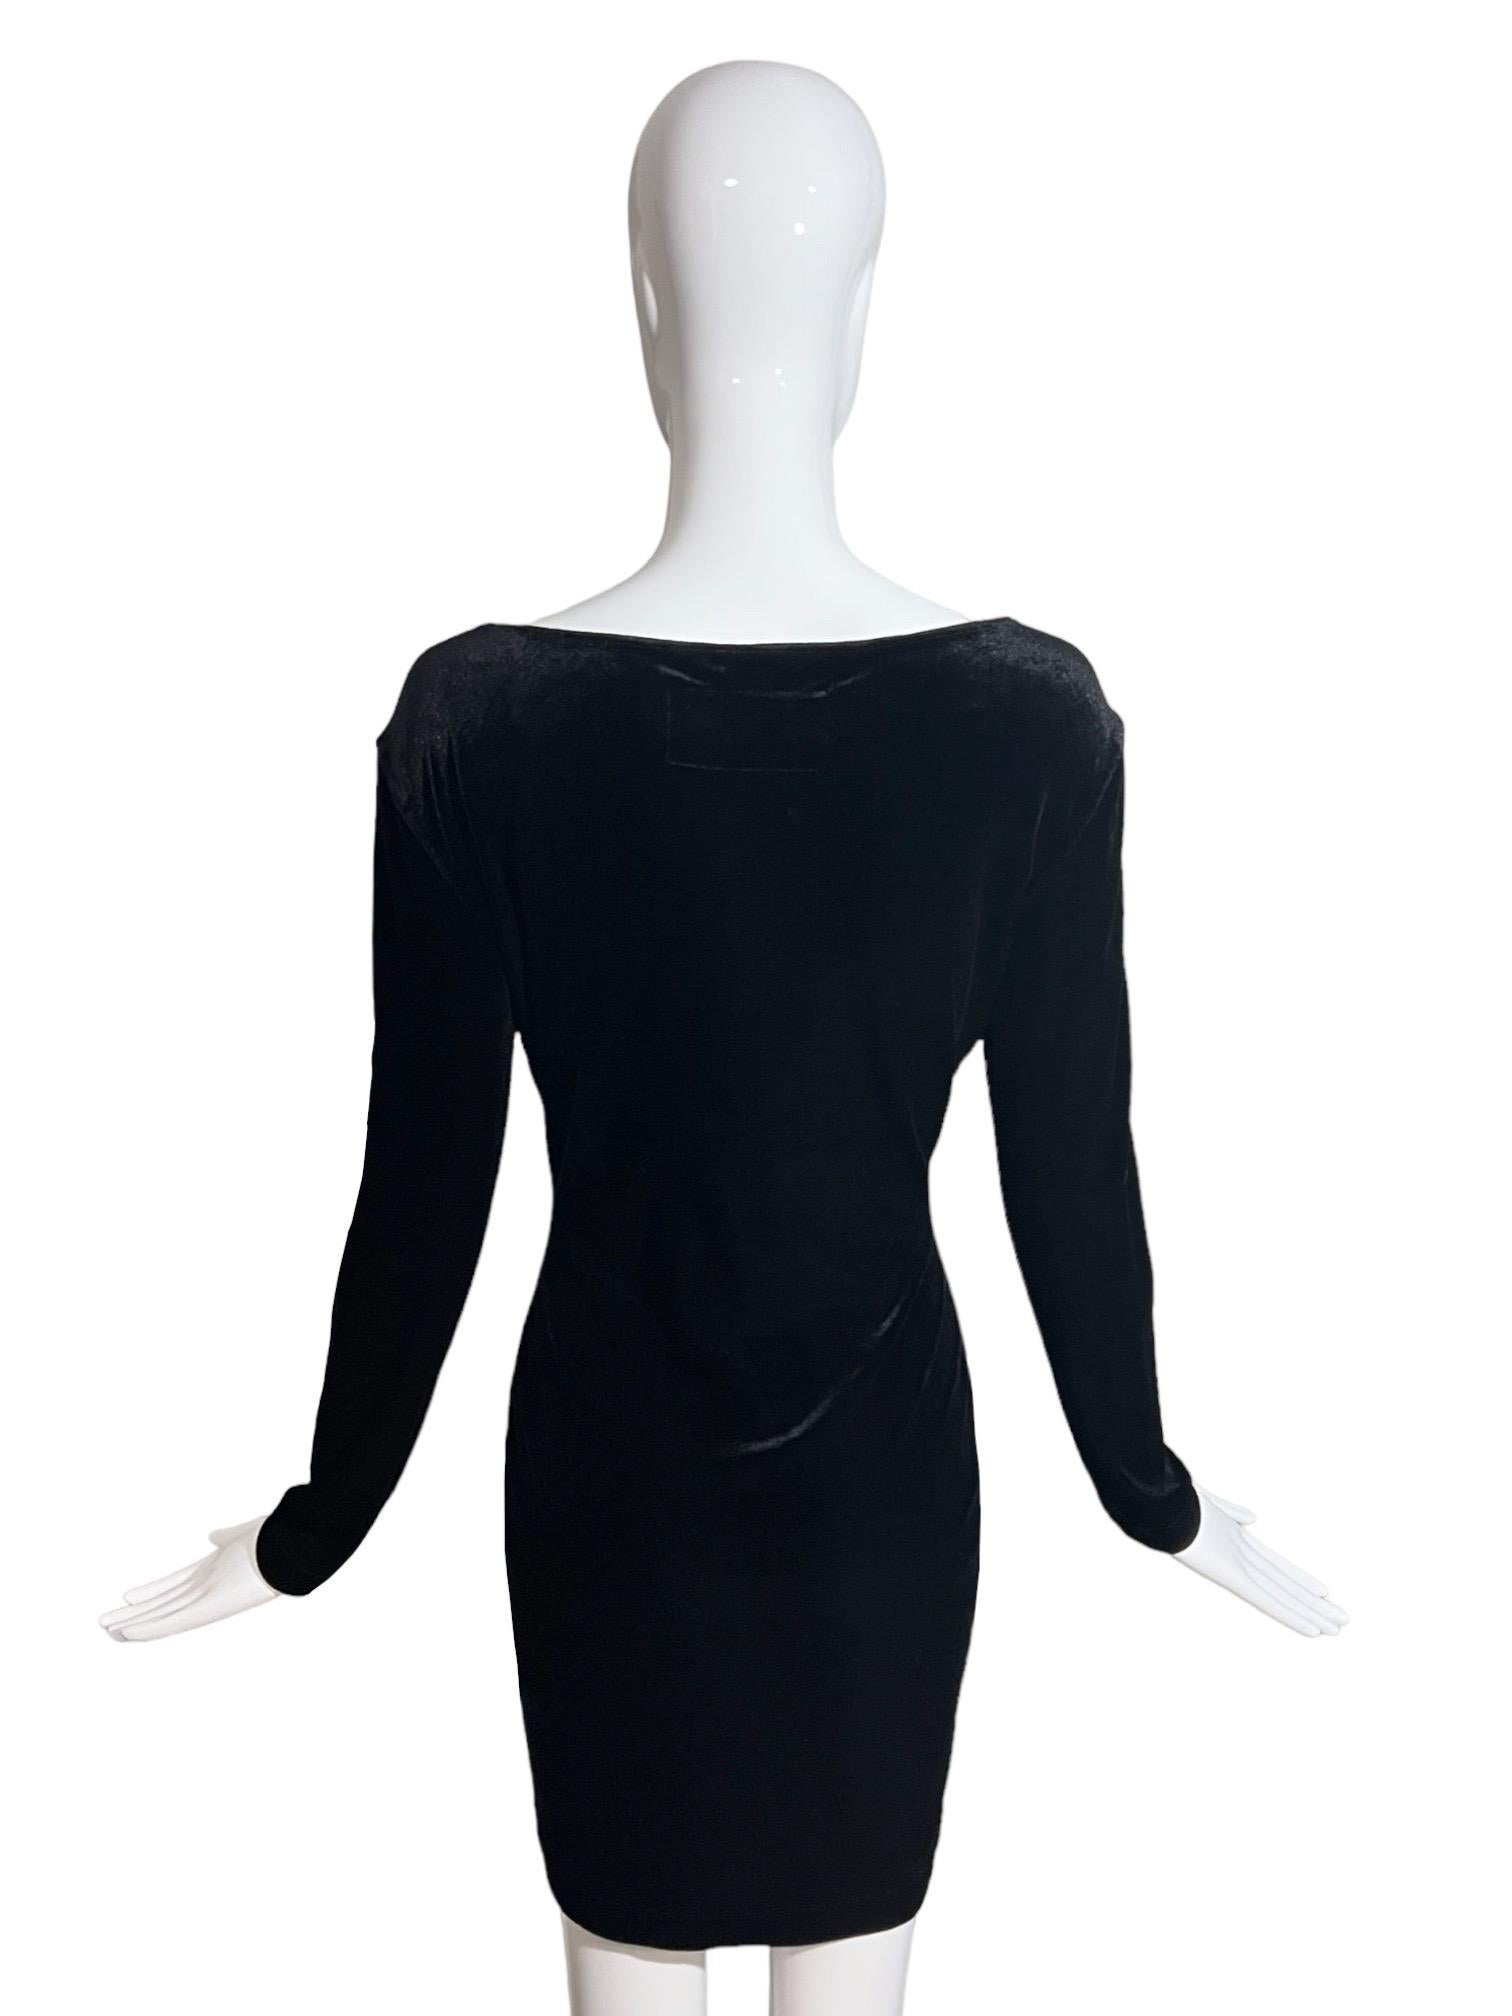 Robe cloutée Moschino Cheap & Chic « Not Just A Pretty Dress » des années 1990 en vente 2